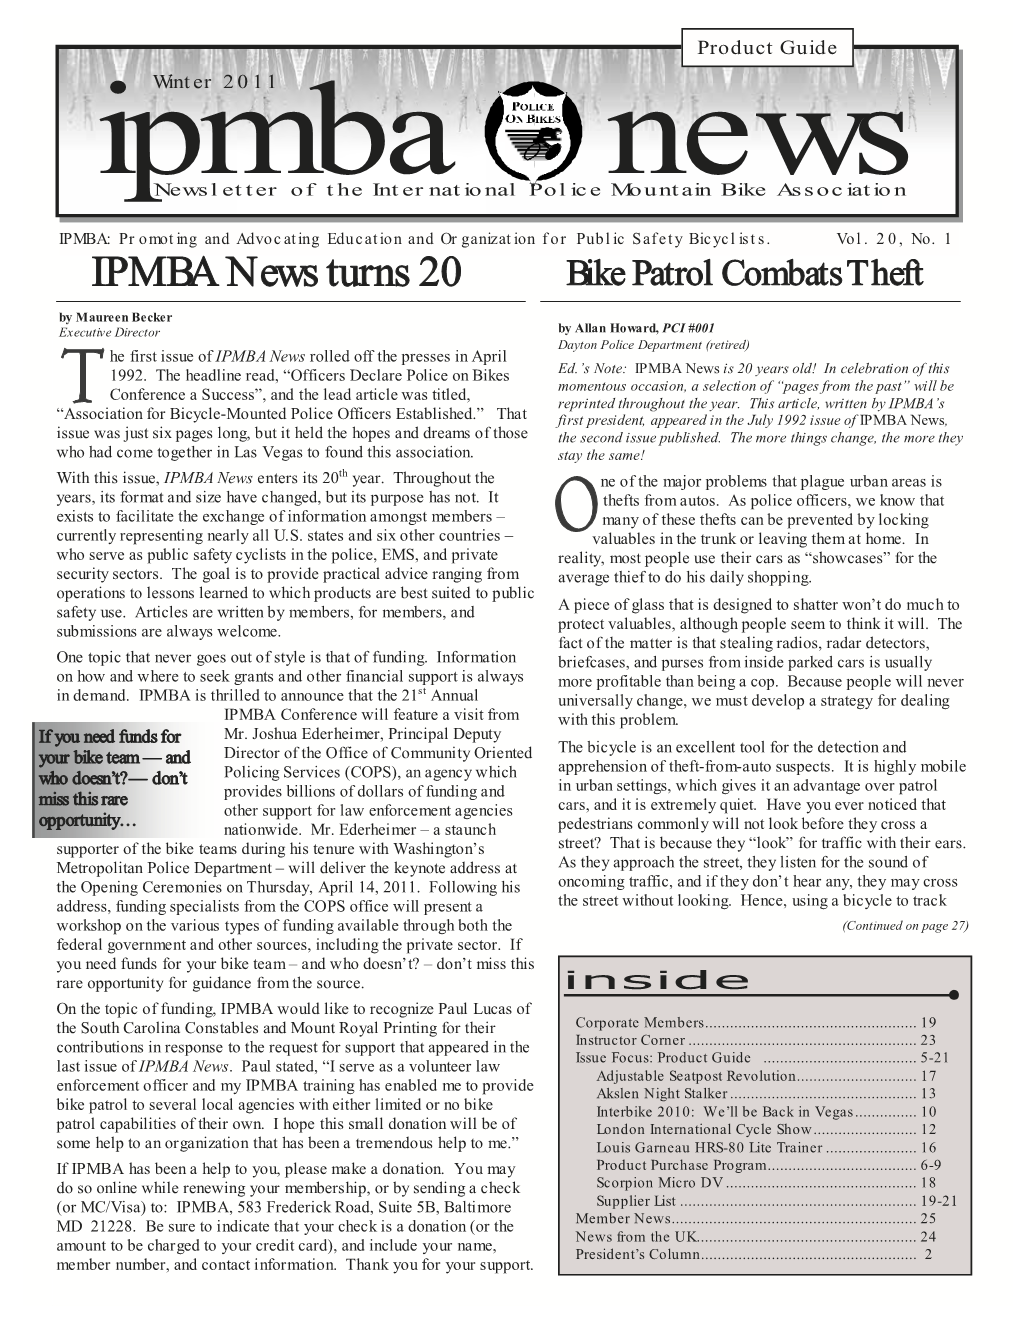 IPMBA News Vol. 20 No. 1 Winter 2011